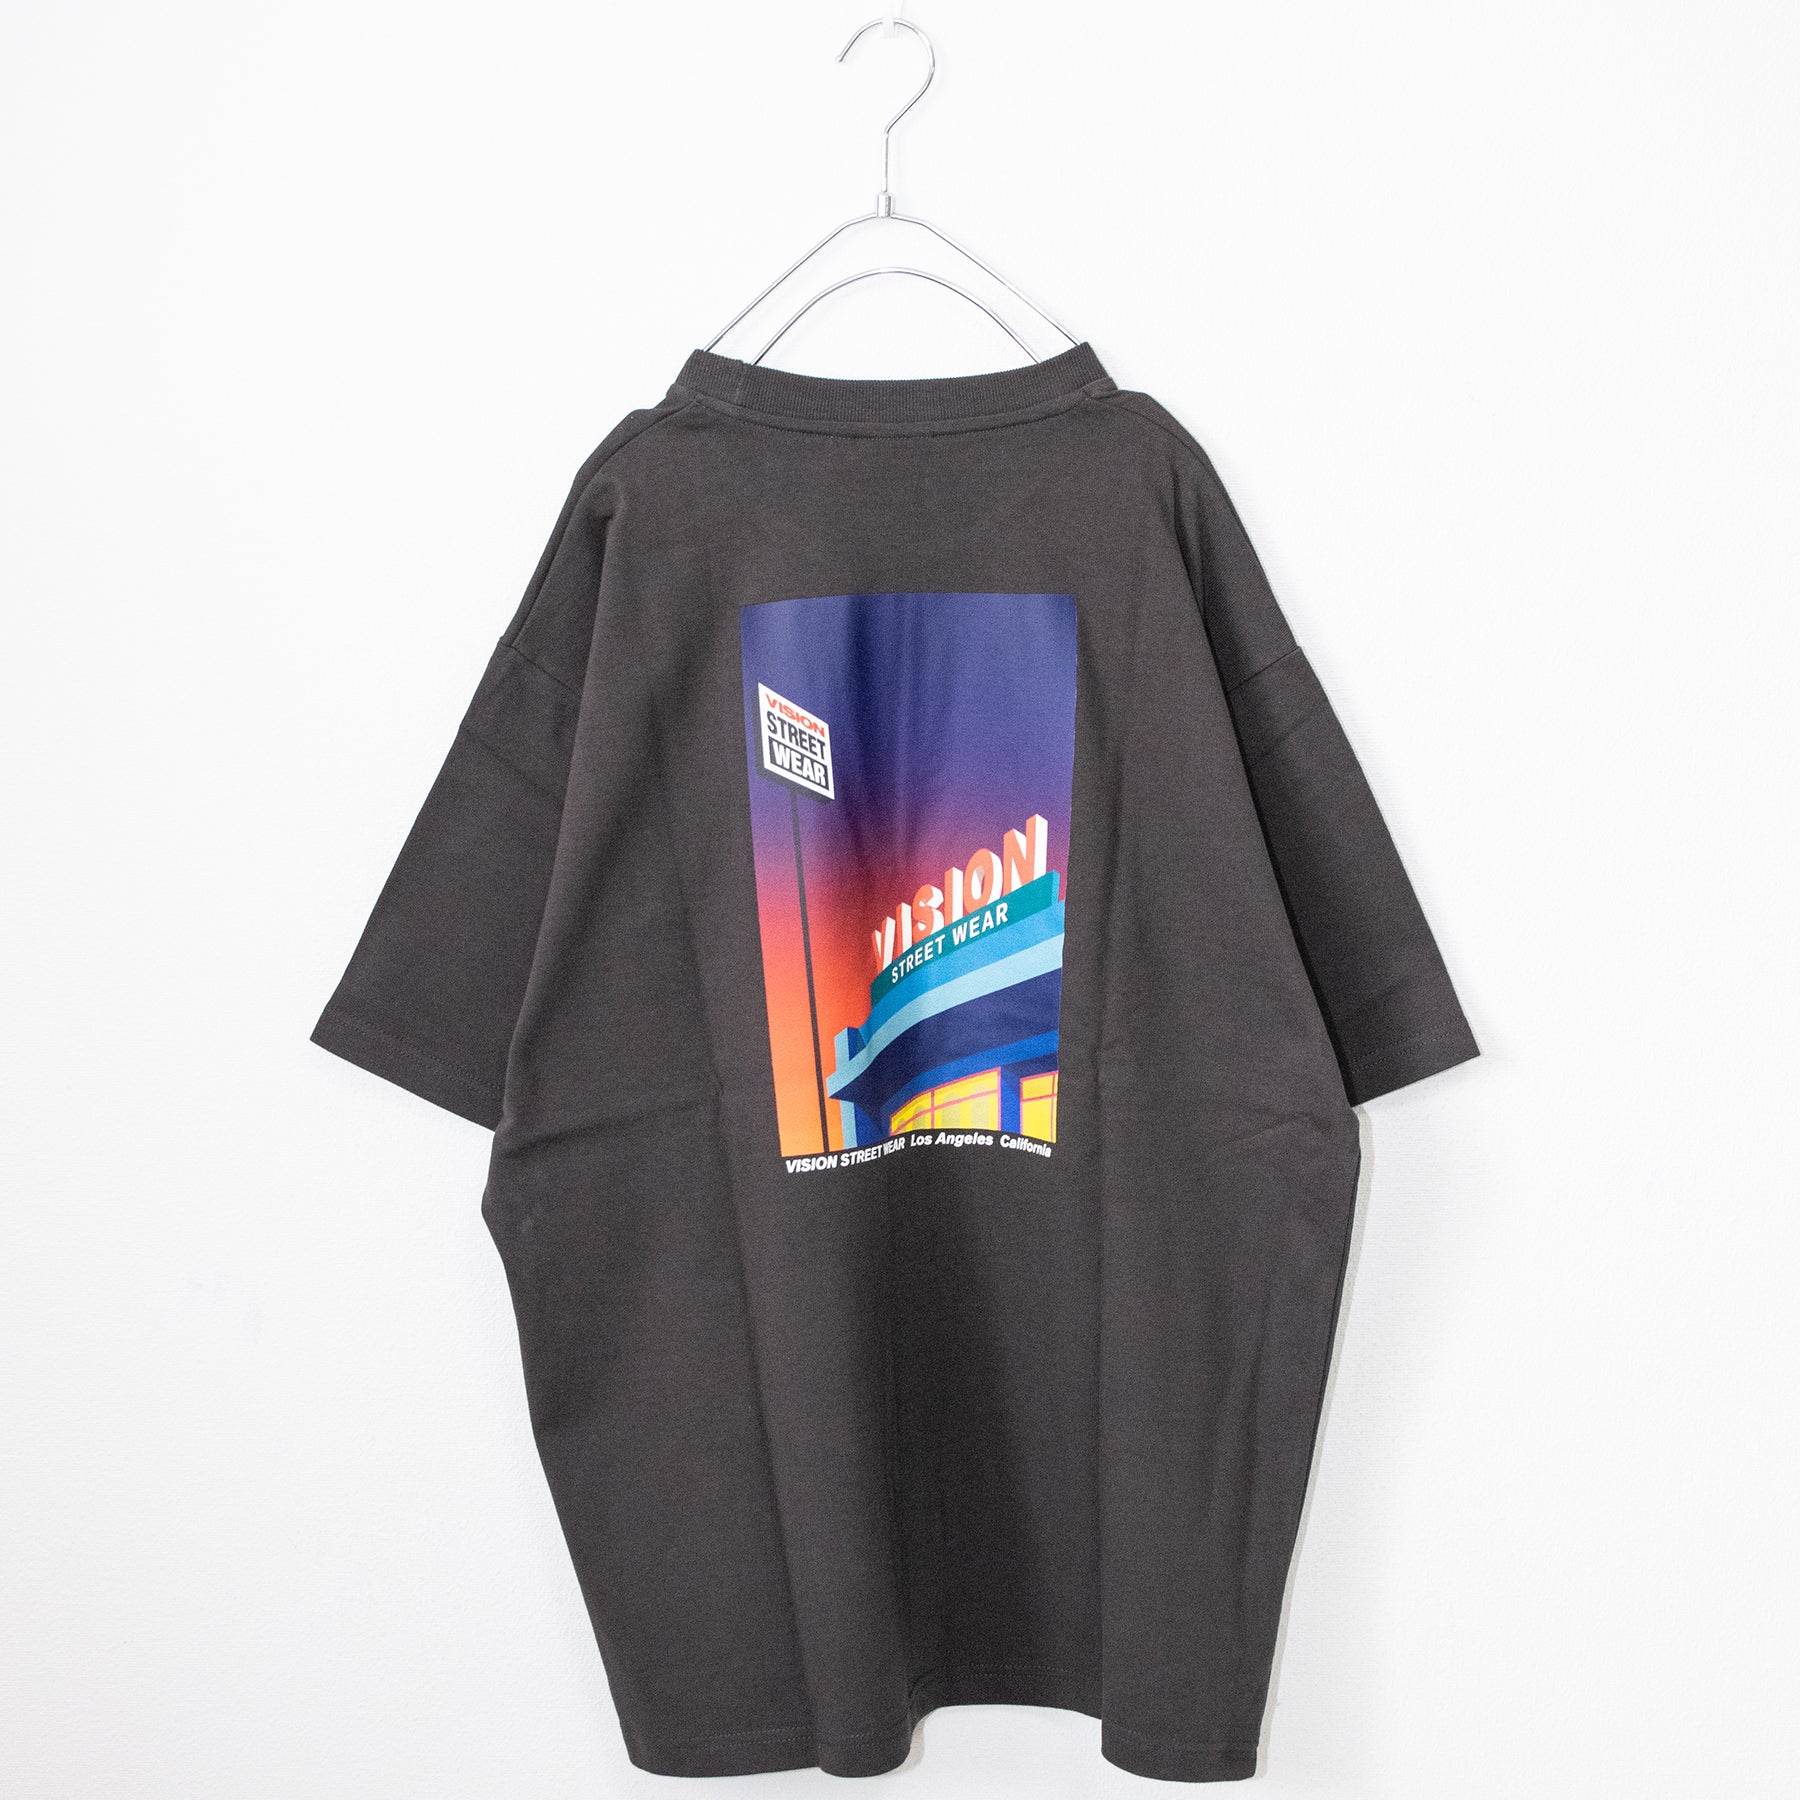 VISION STREET WEAR Retro Shop S/S T-shirt (2 color) - YOUAREMYPOISON